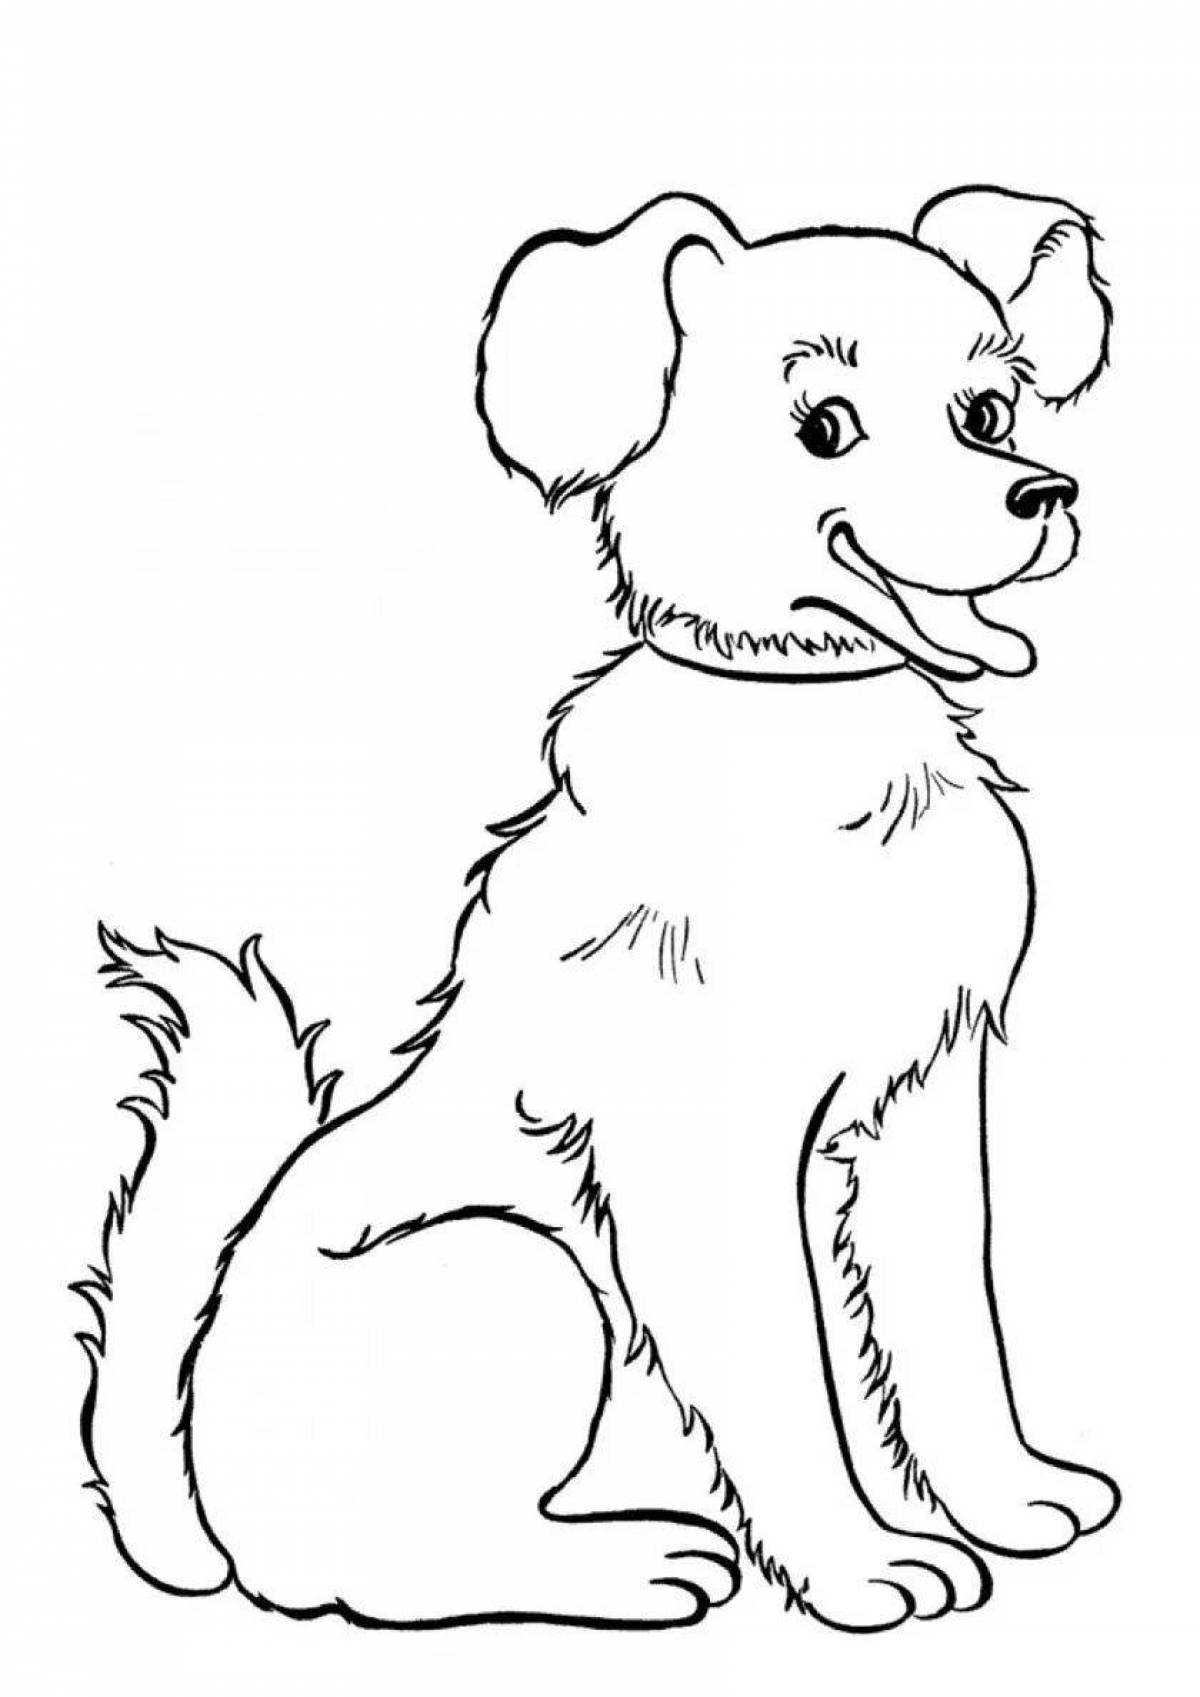 Comic dog drawing